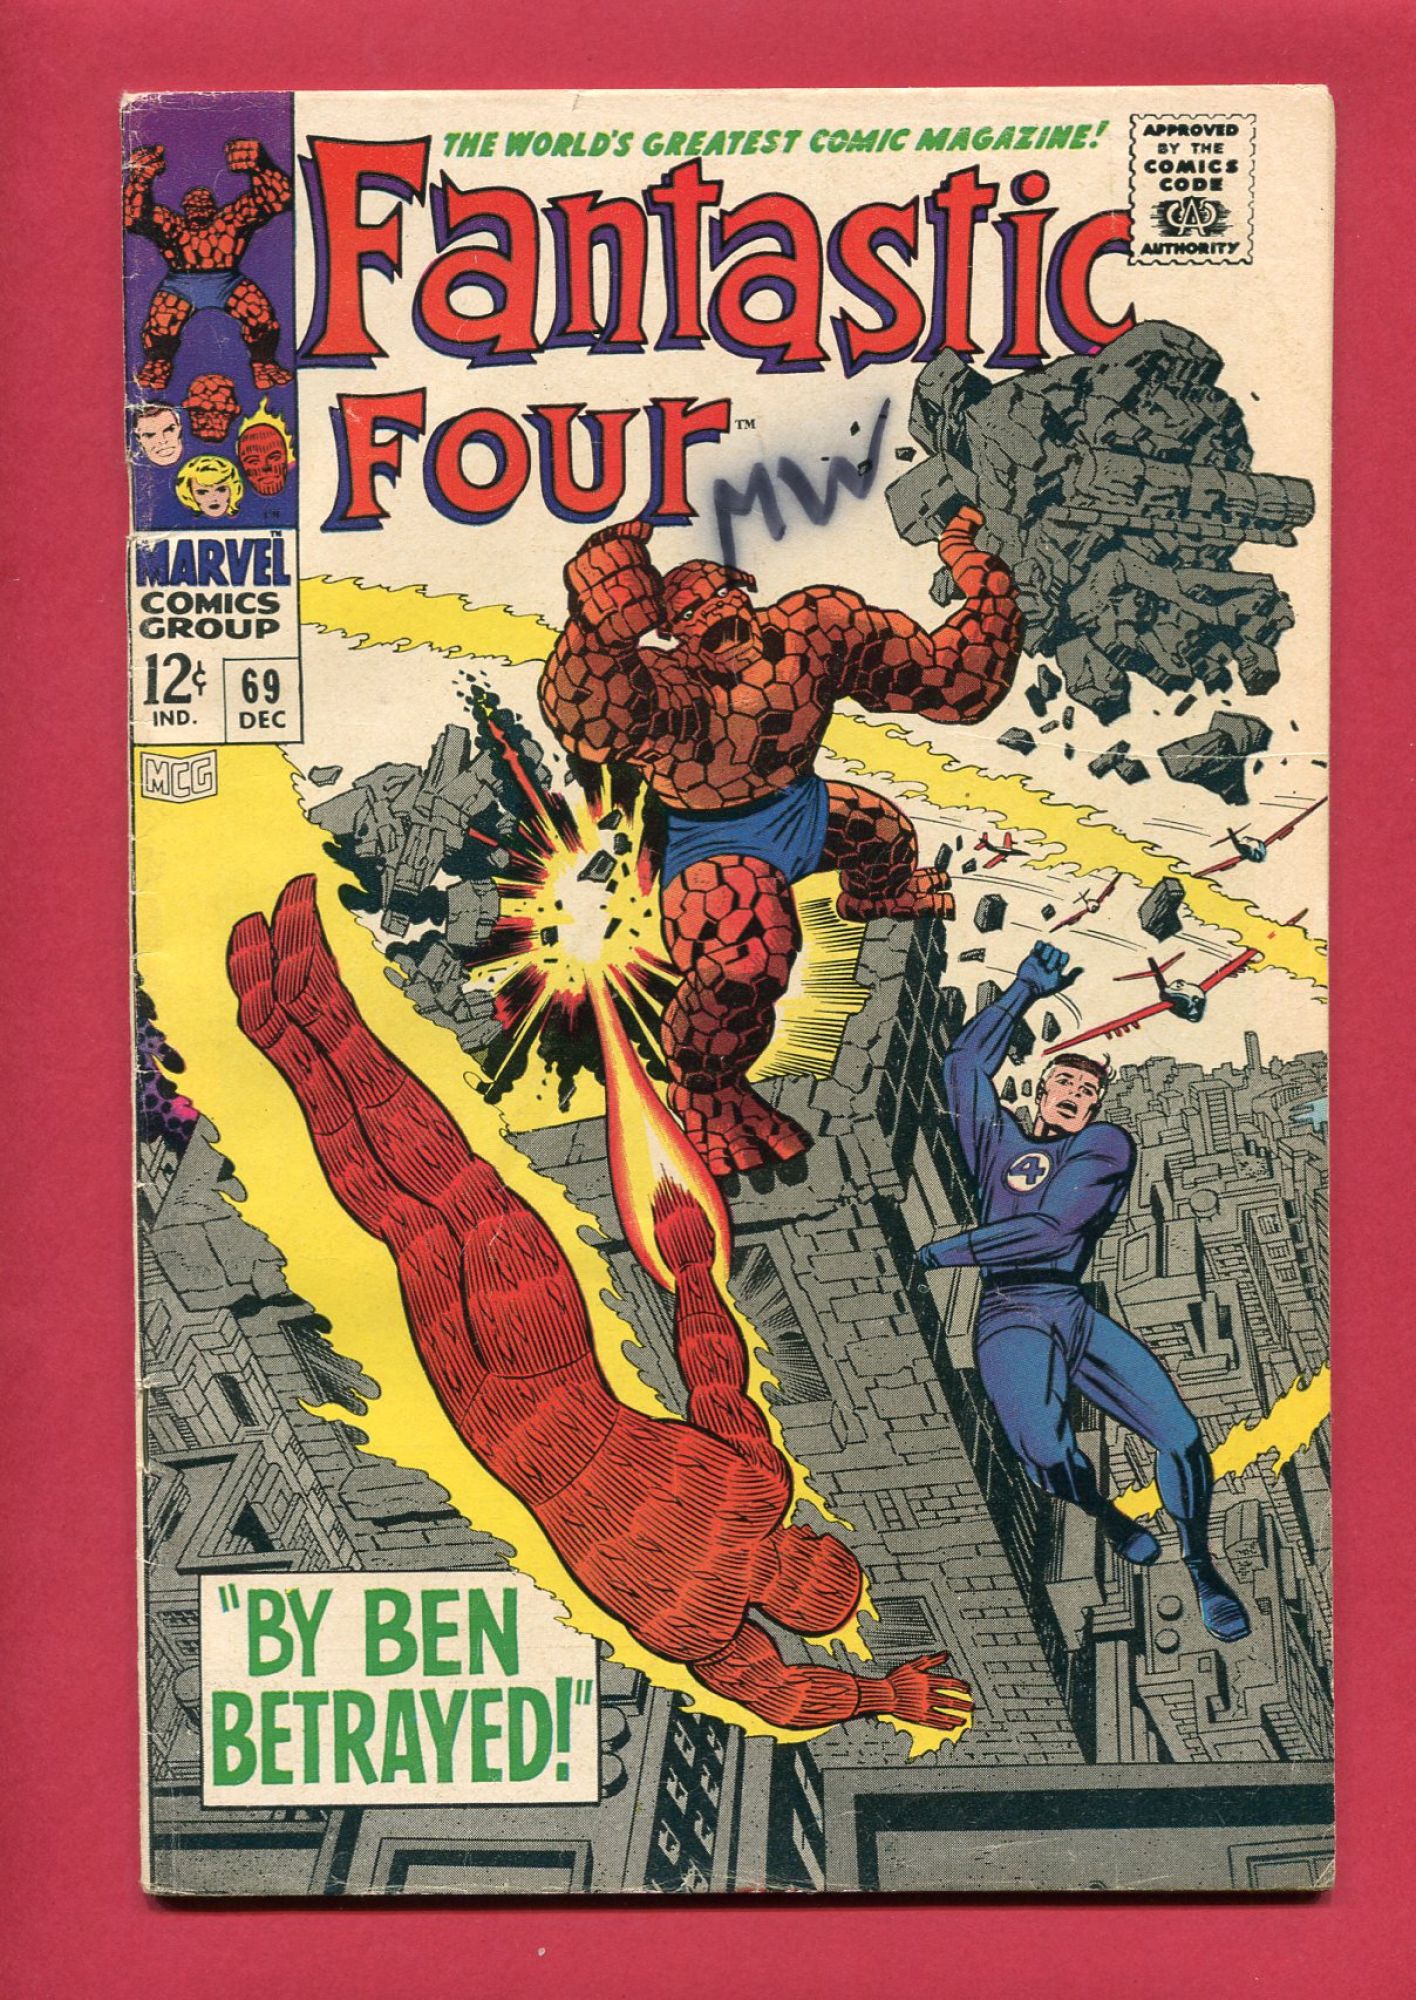 Fantastic Four #69, Dec 1967, 4.5 VG+